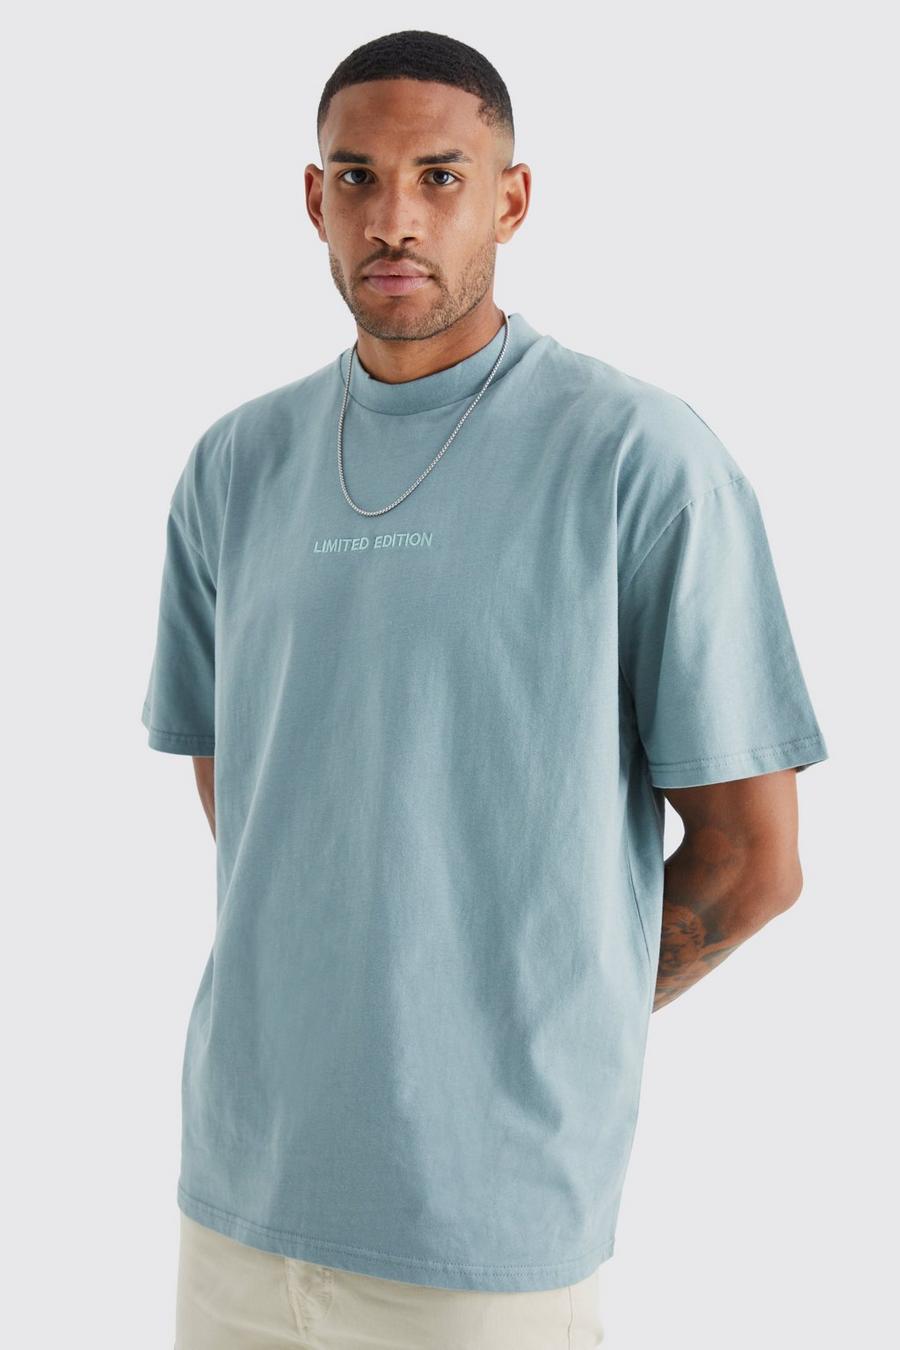 Slate grey Tall Oversized Heavyweight Extended Neck T-shirt 